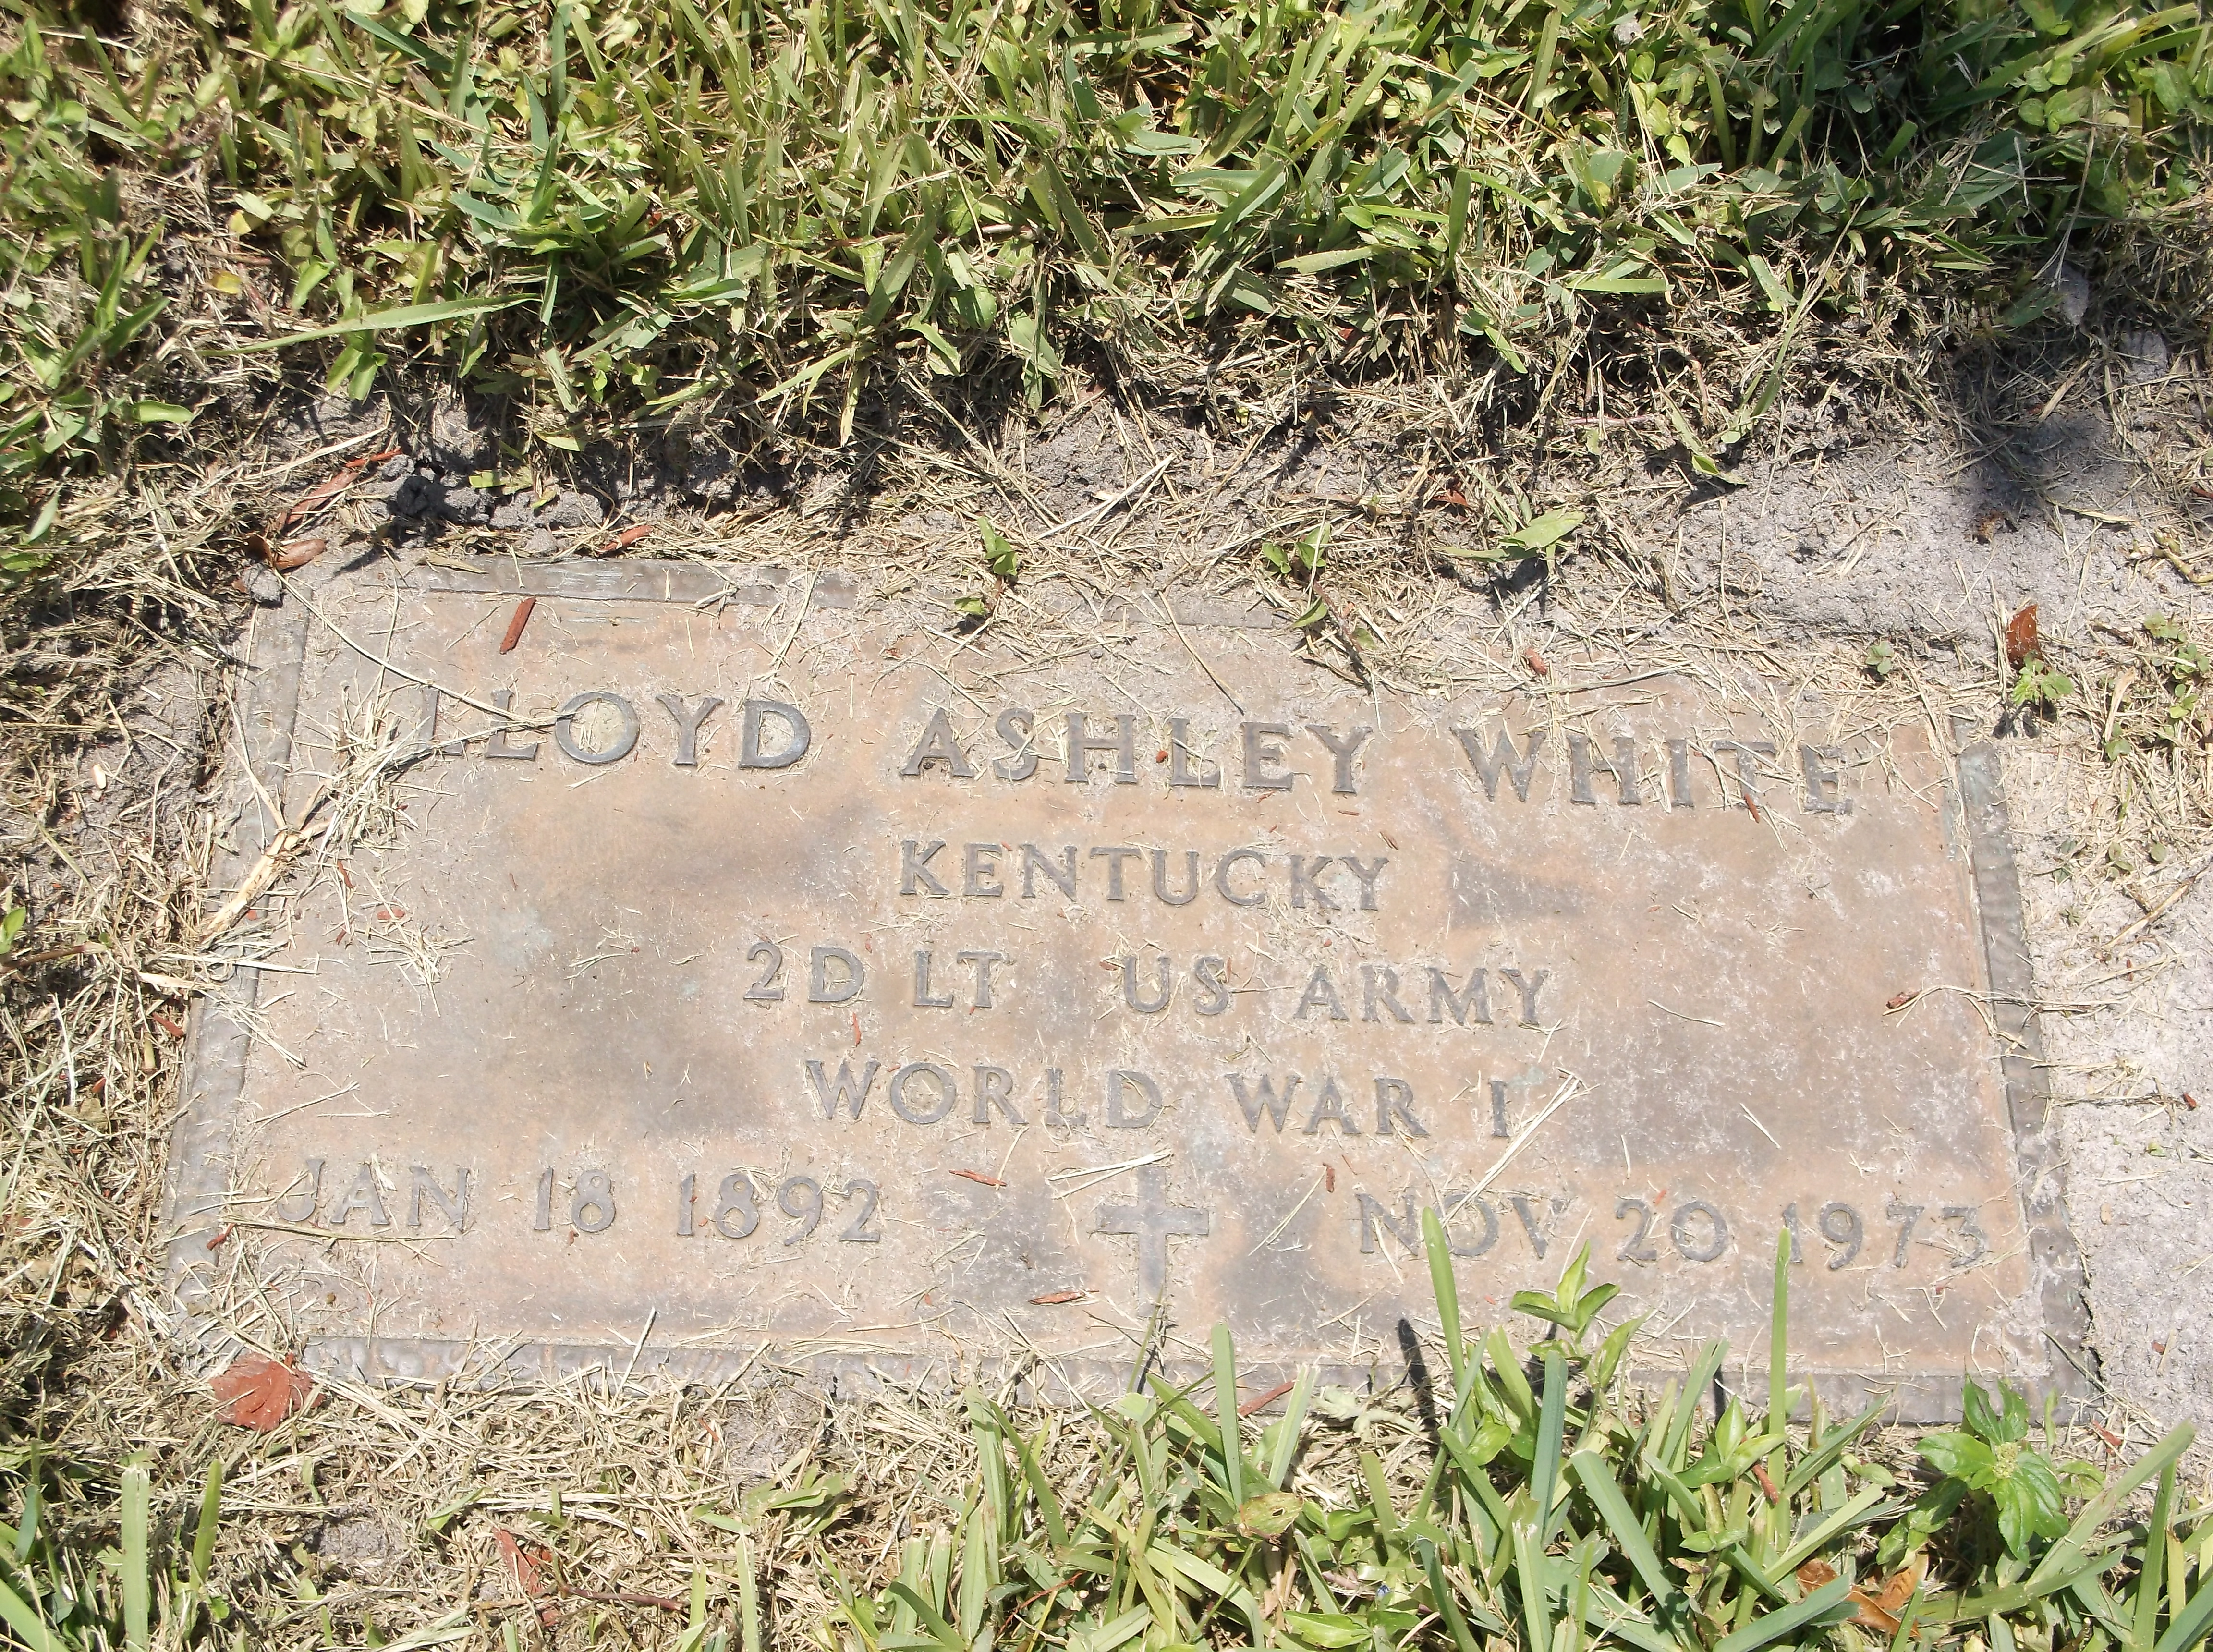 Lloyd Ashley White